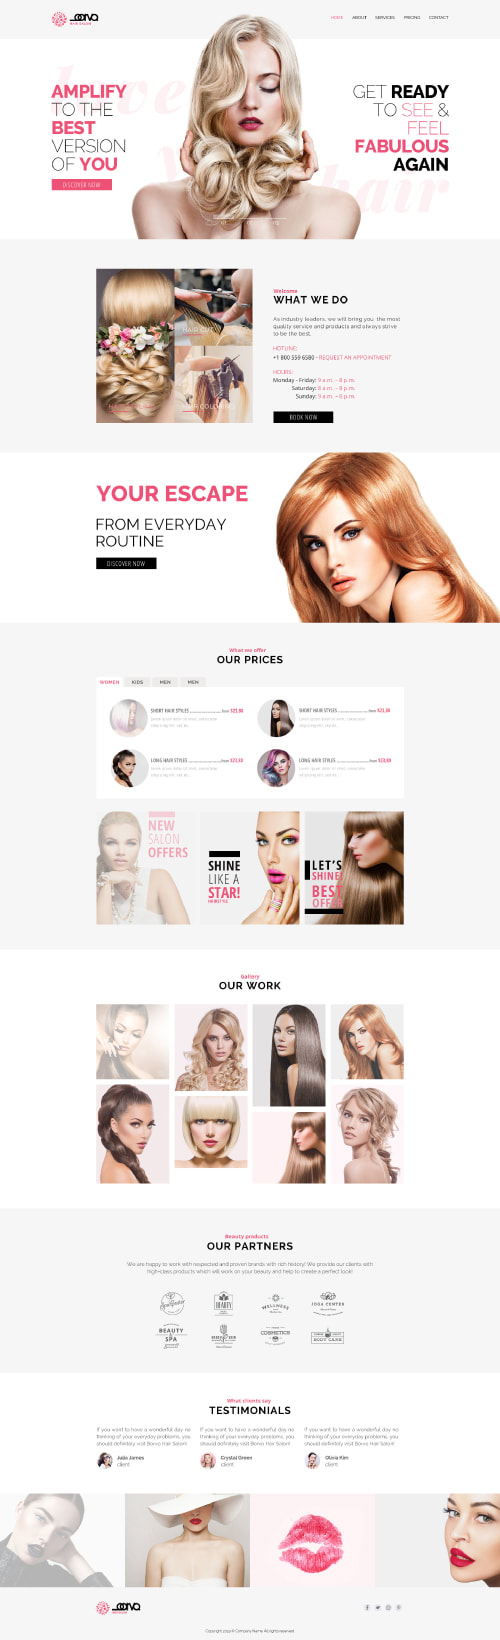 The JPcreative_ Landing Page Design_Hair Salon